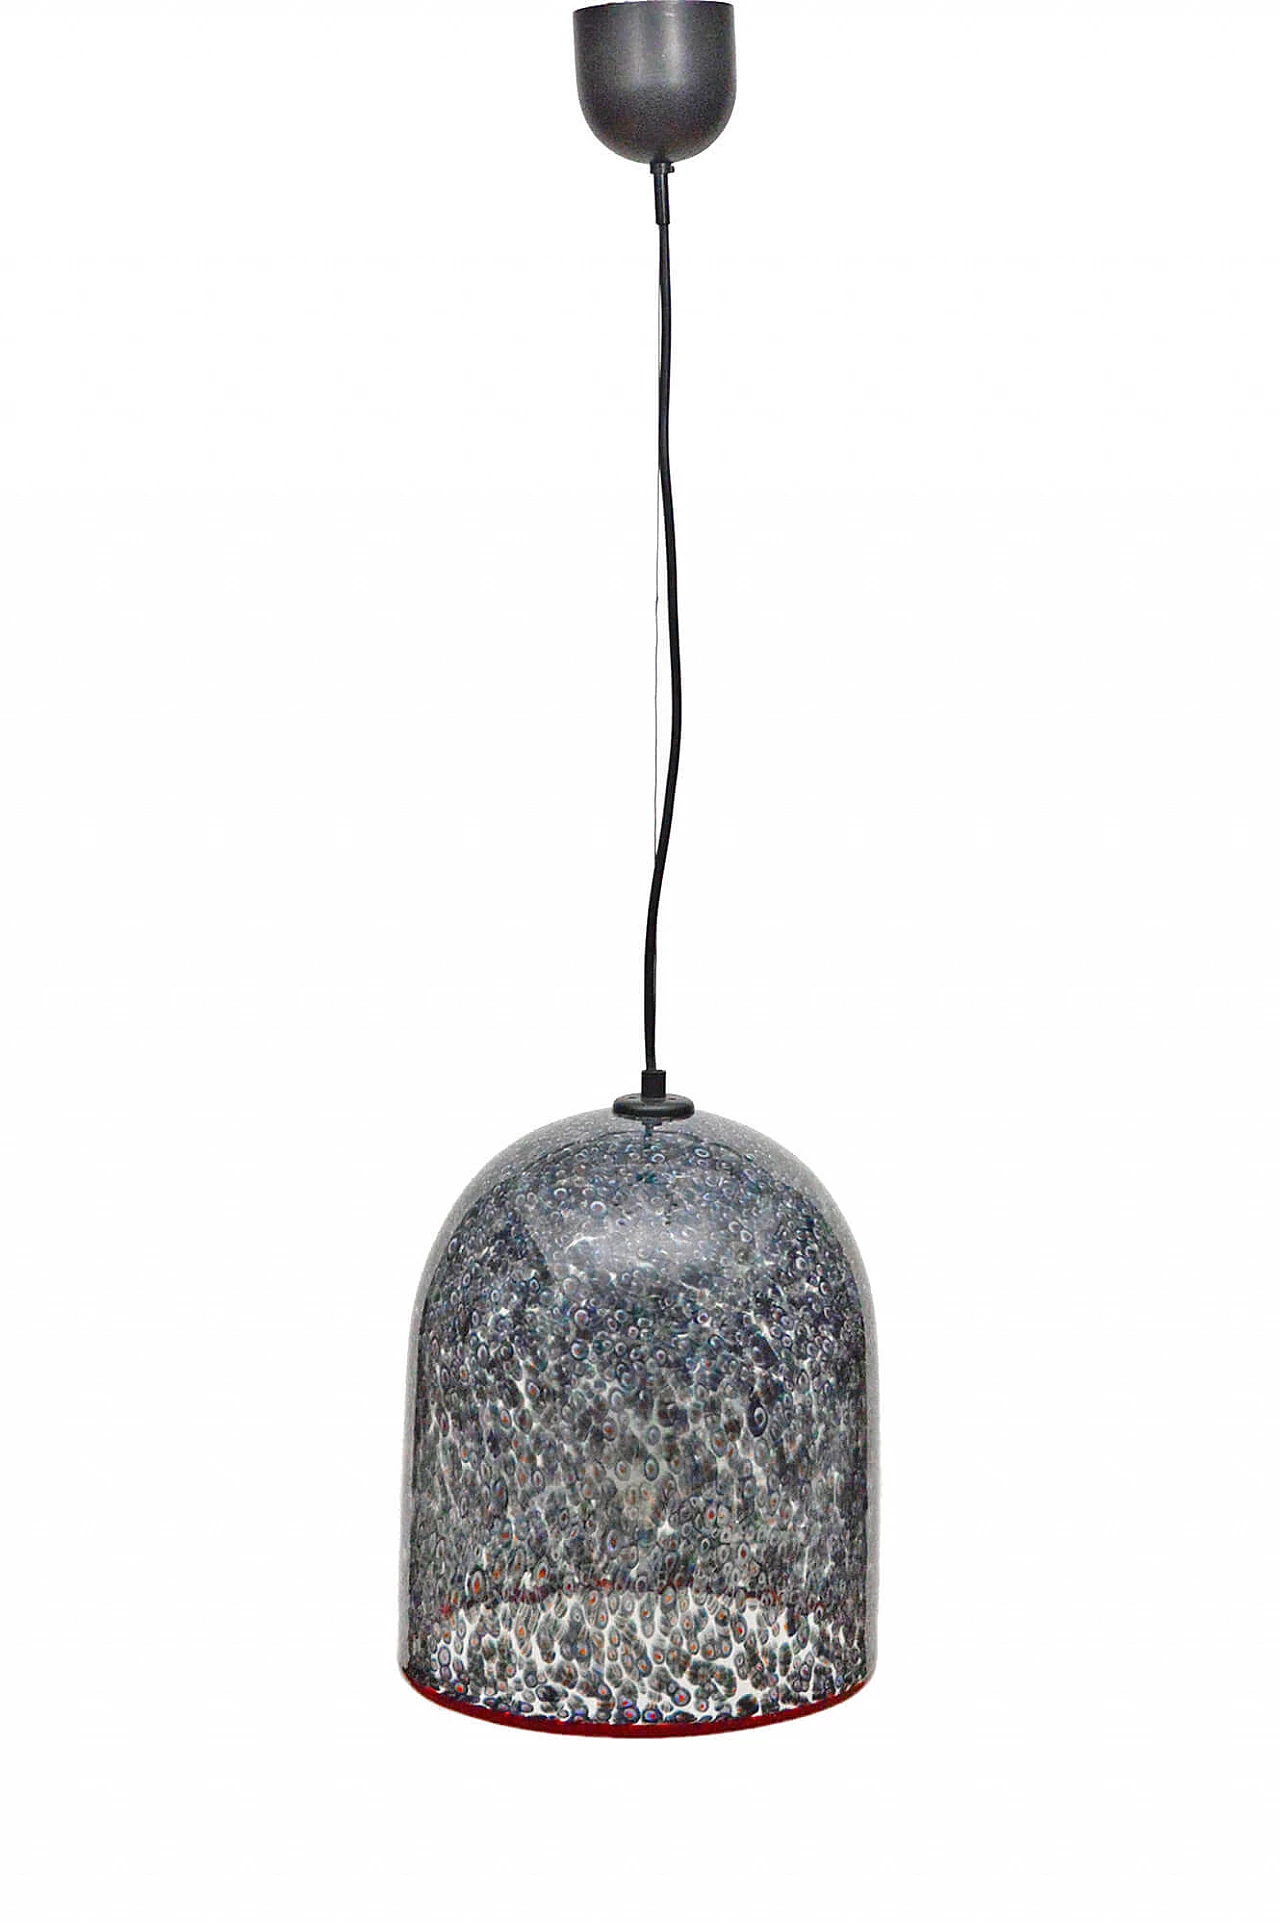 Pendand lamp Neverrino by Gae Aulenti for Vistosi, 1970s 1243357